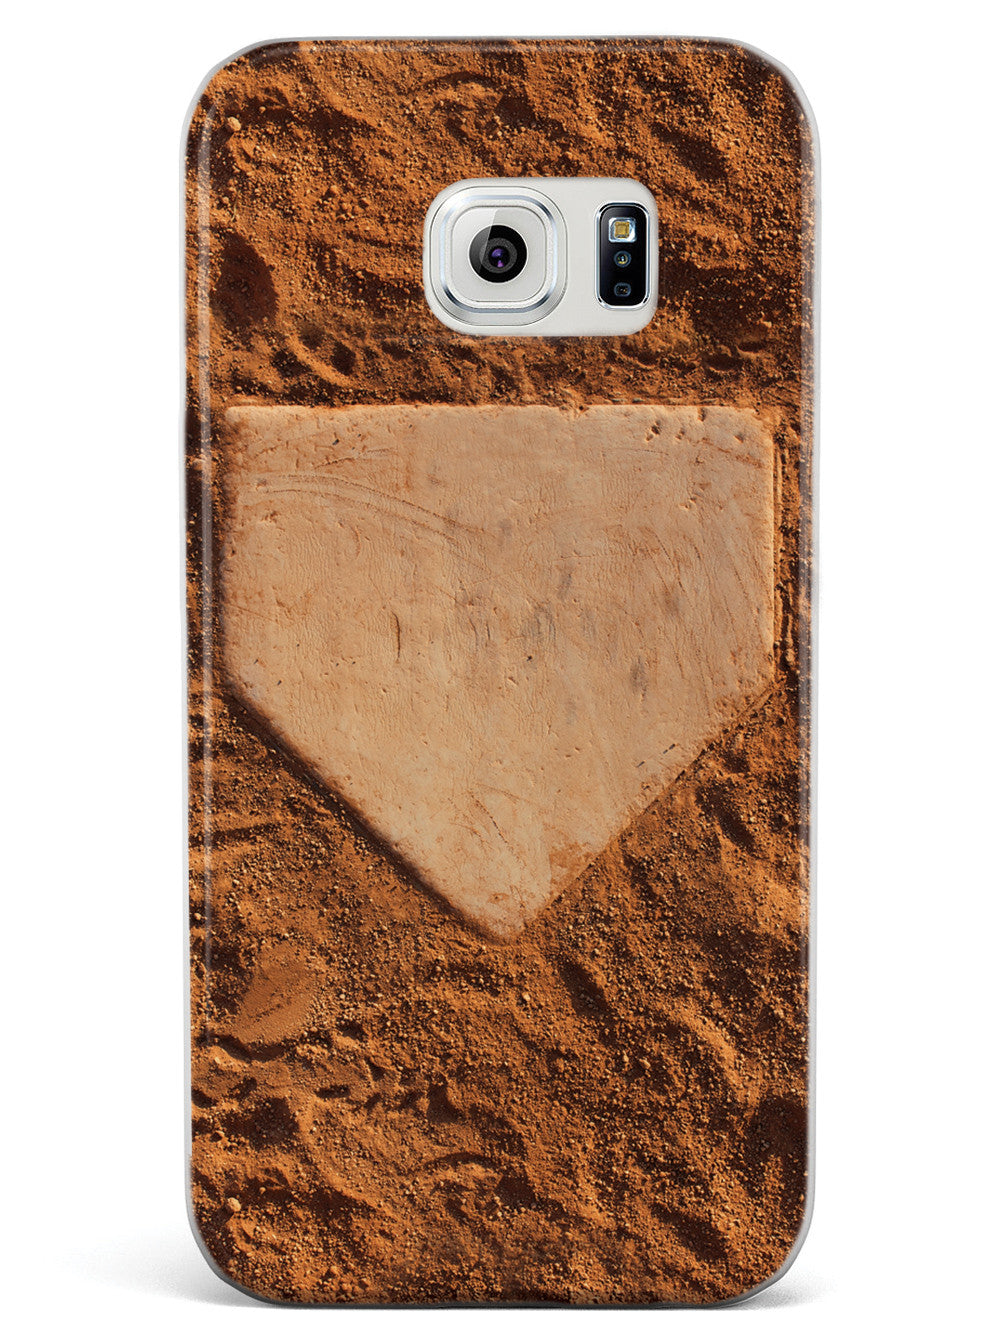 Homeplate Baseball field Case